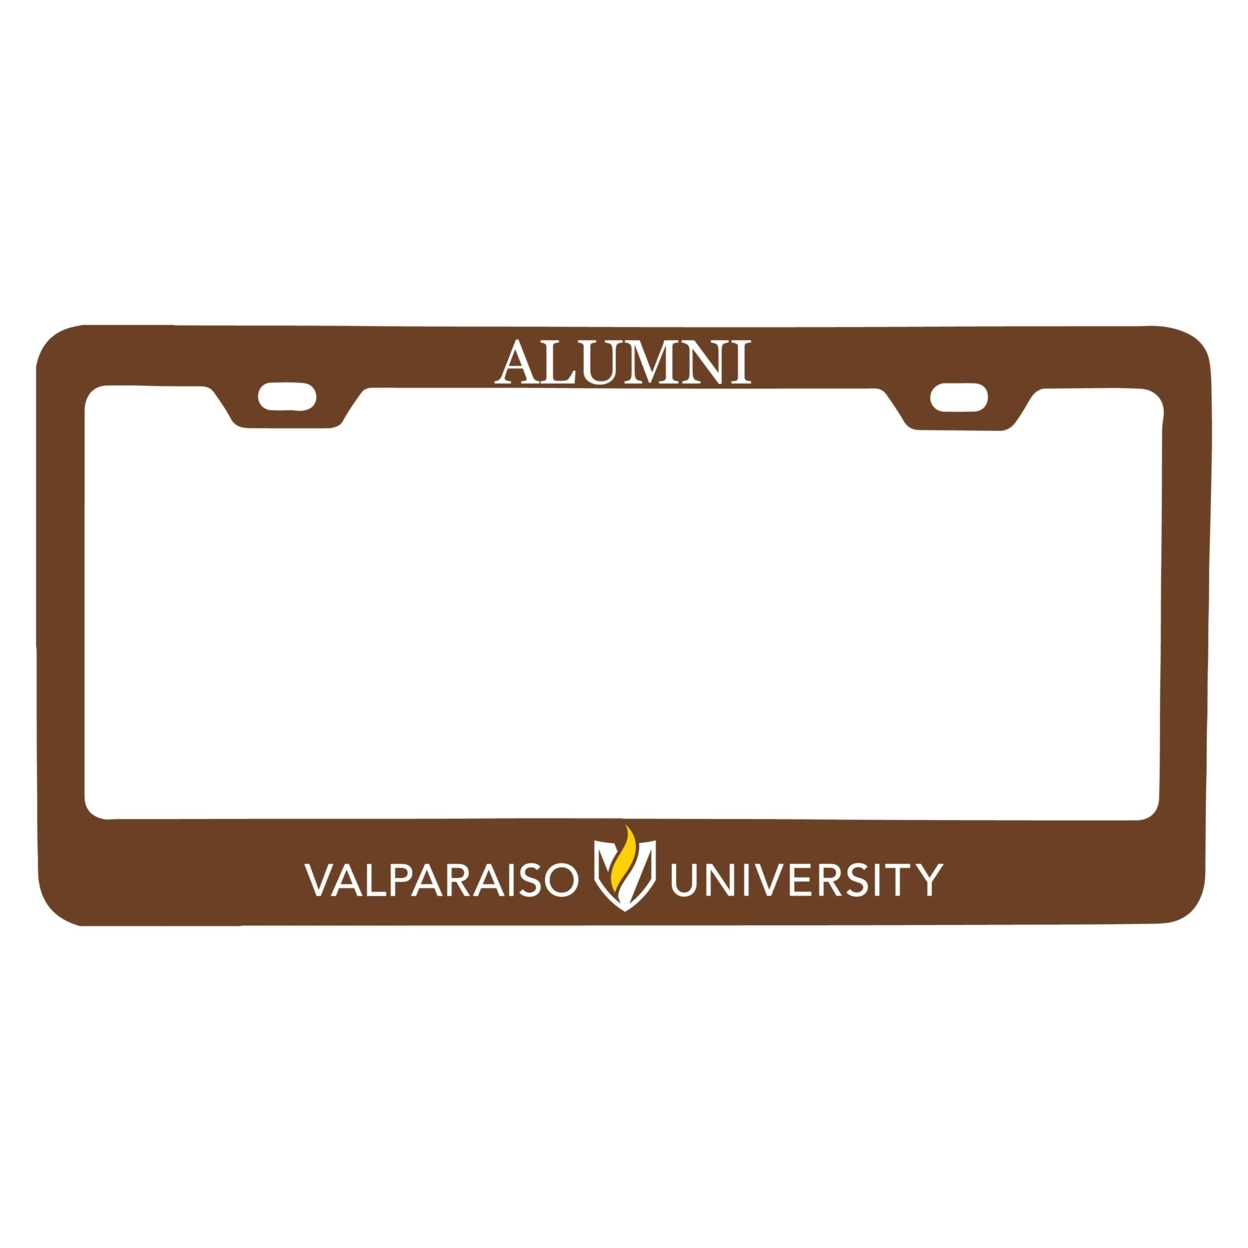 Valparaiso University Alumni License Plate Frame